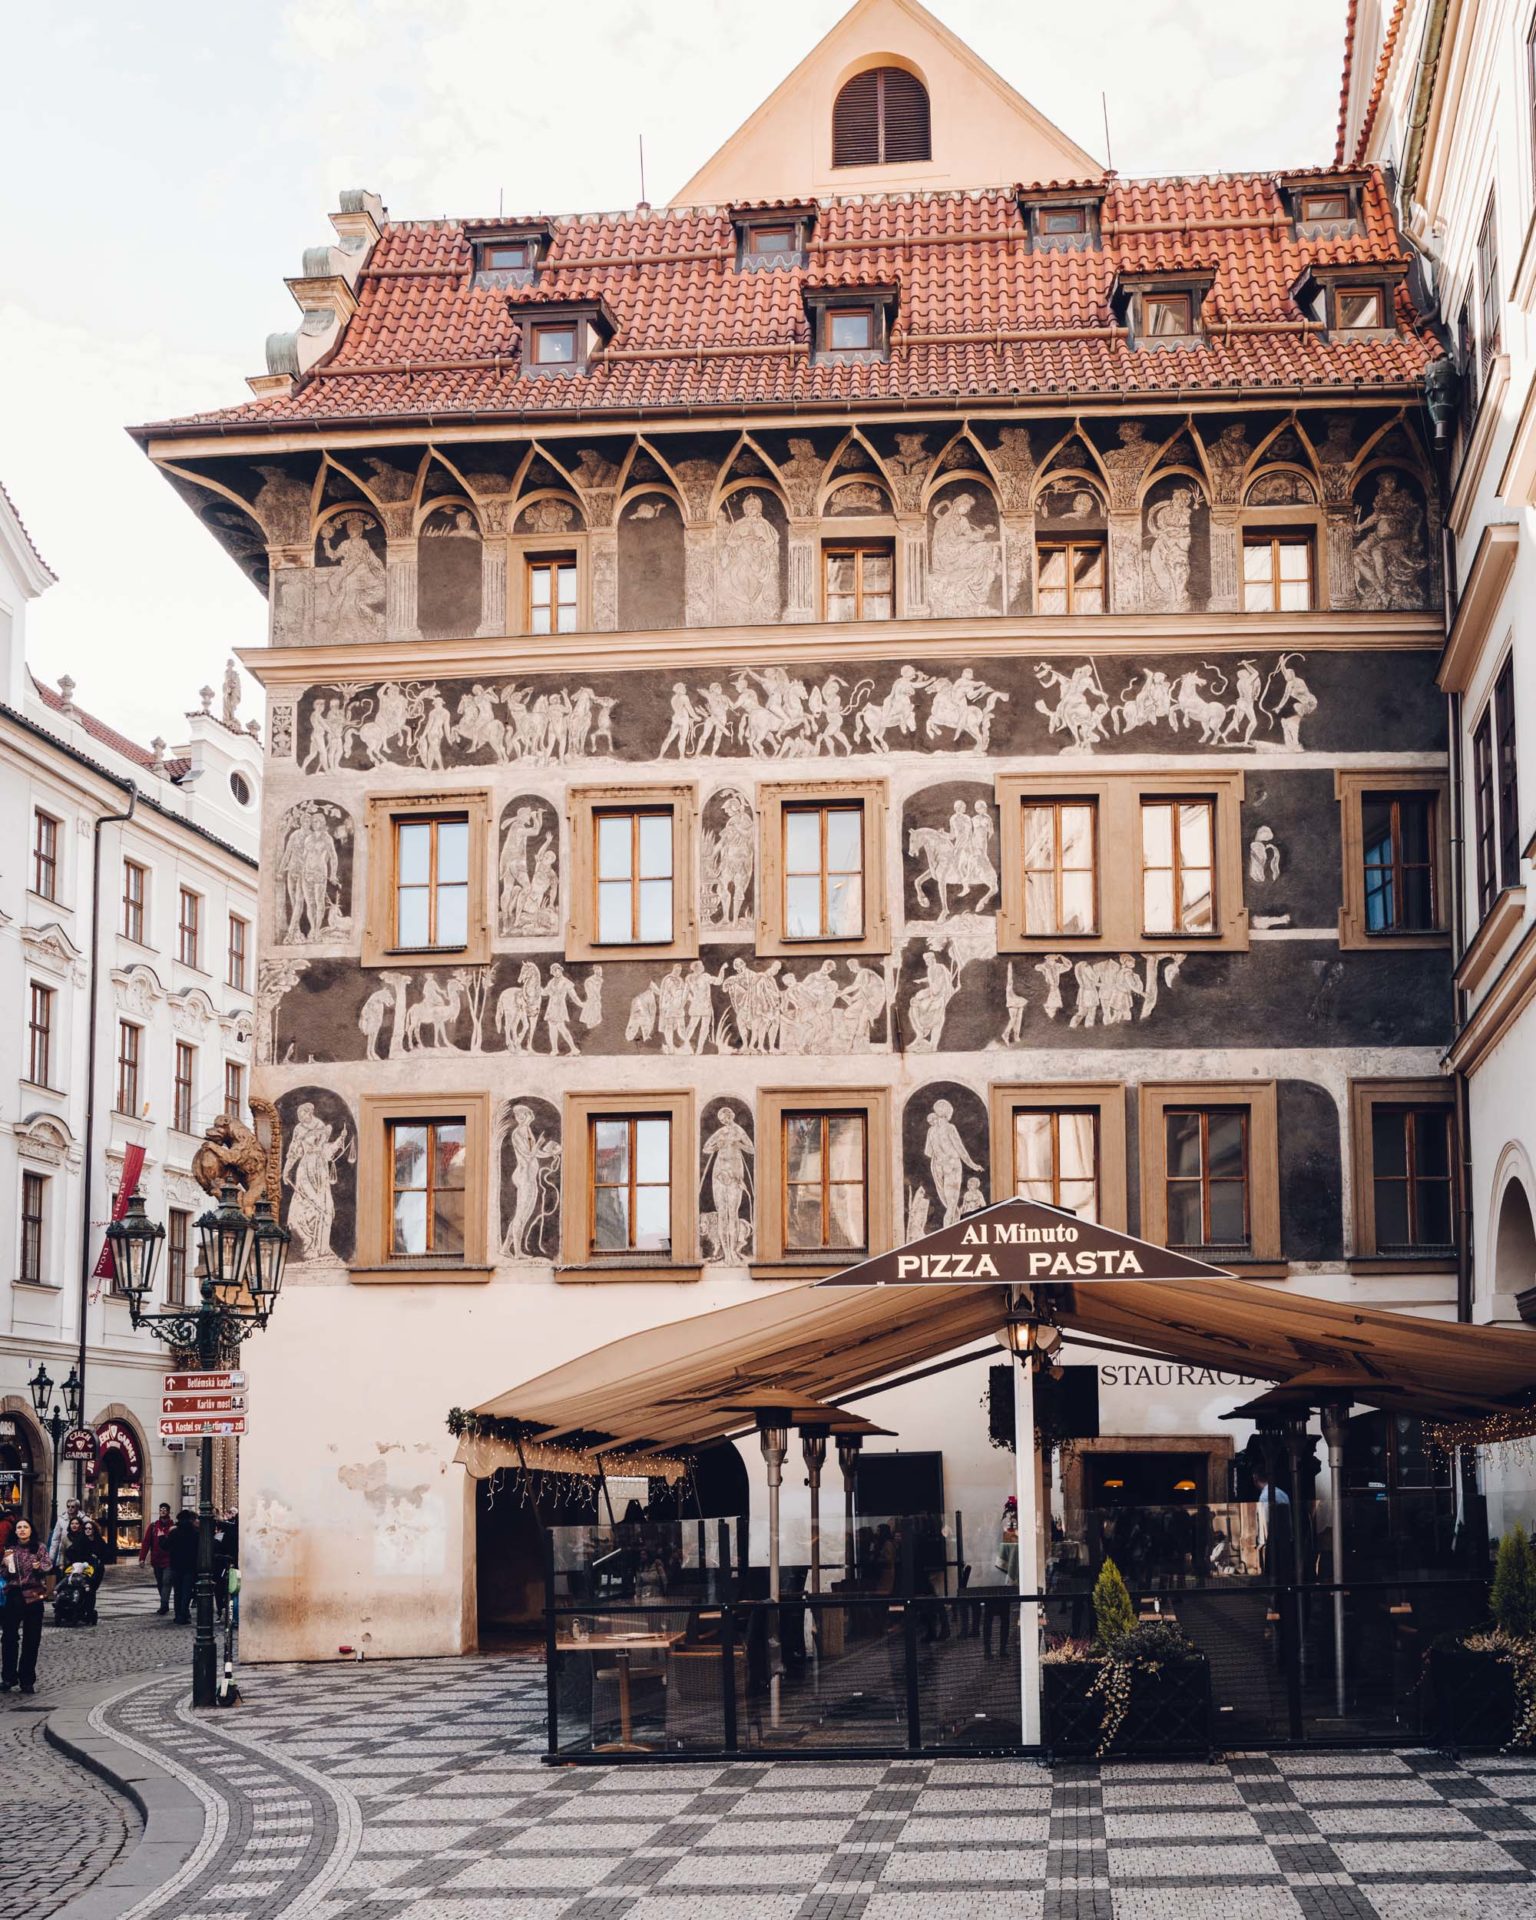 Old town square in Prague, Czech Republic